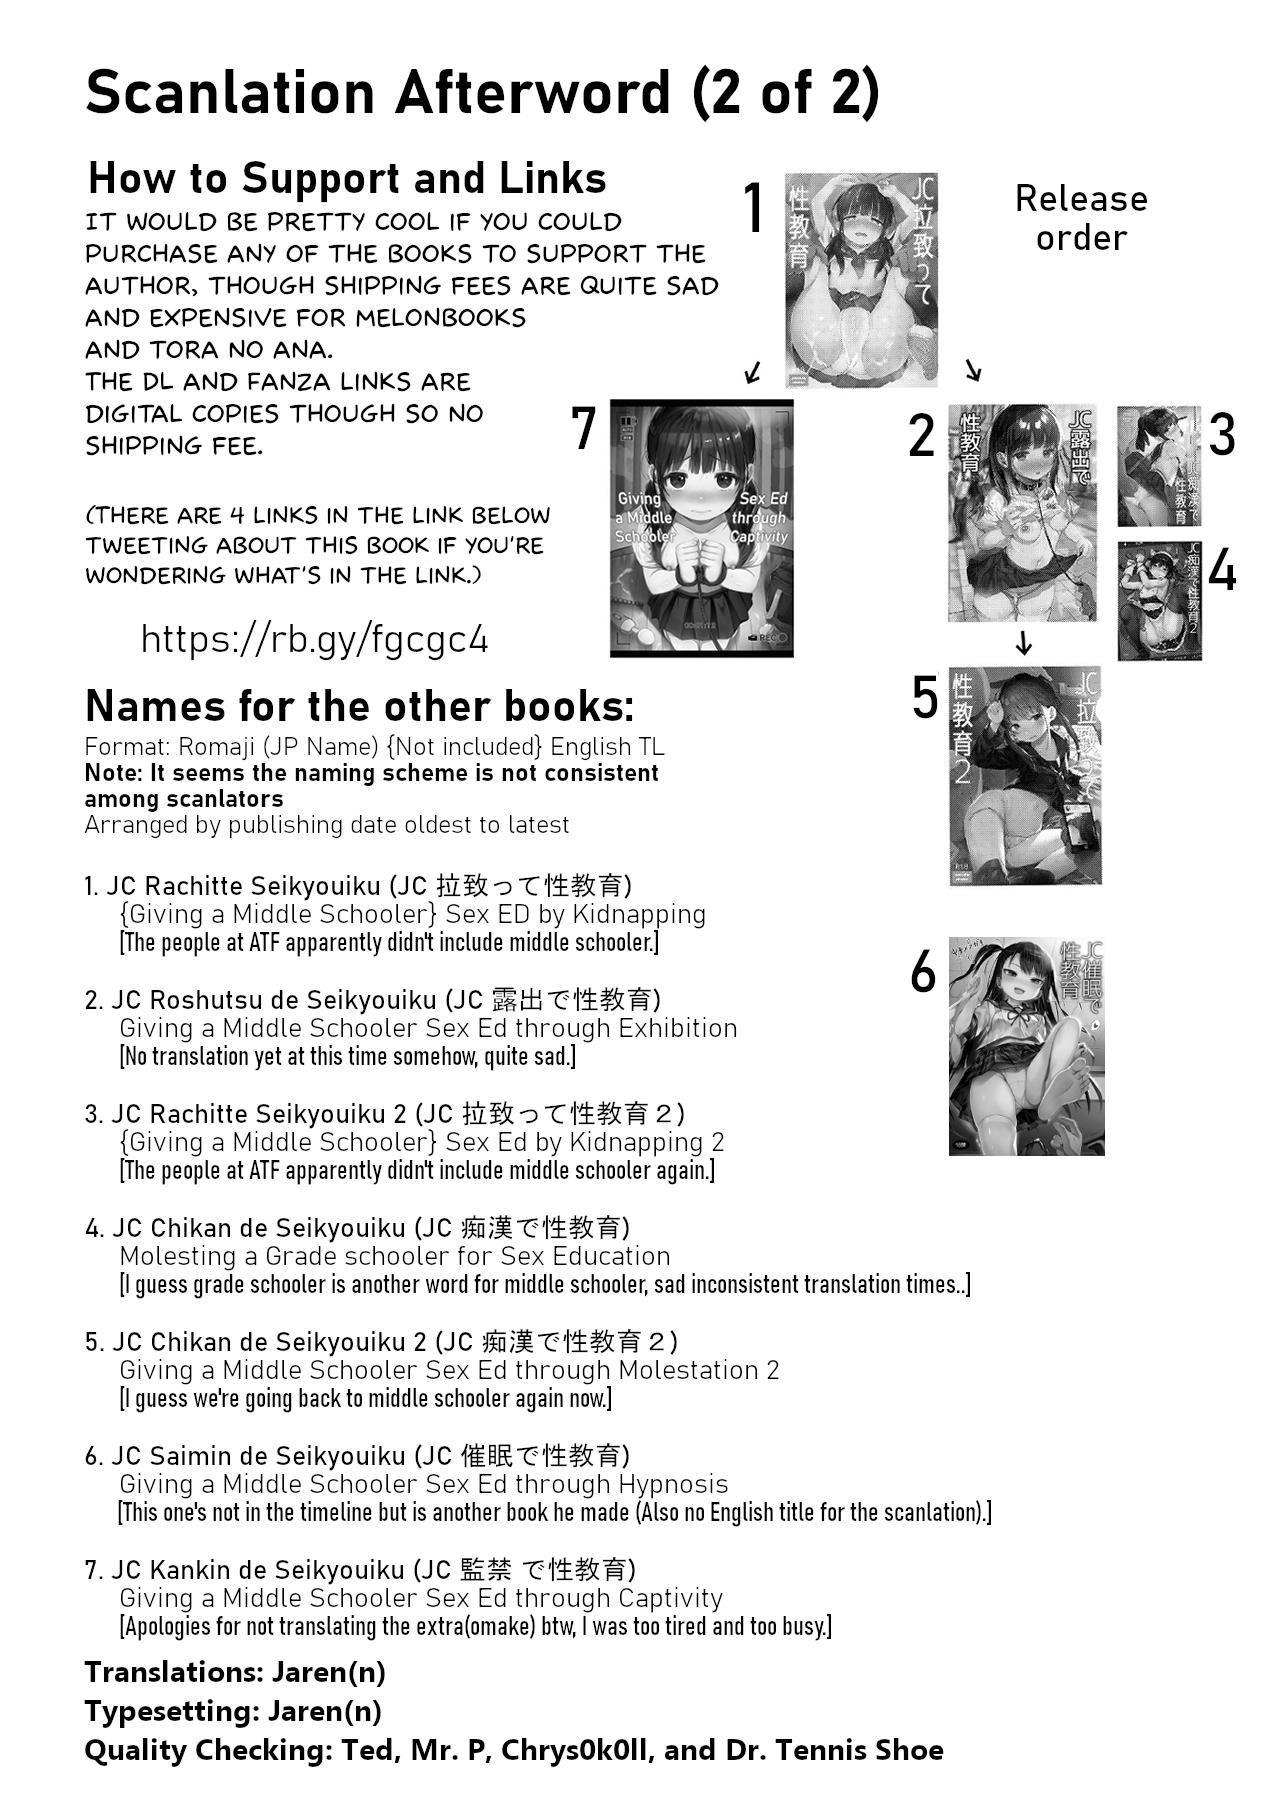 Jerking Off JC Kankin de Seikyouiku | Giving a Middle Schooler Sex Ed through Captivity - Original Cop - Page 39